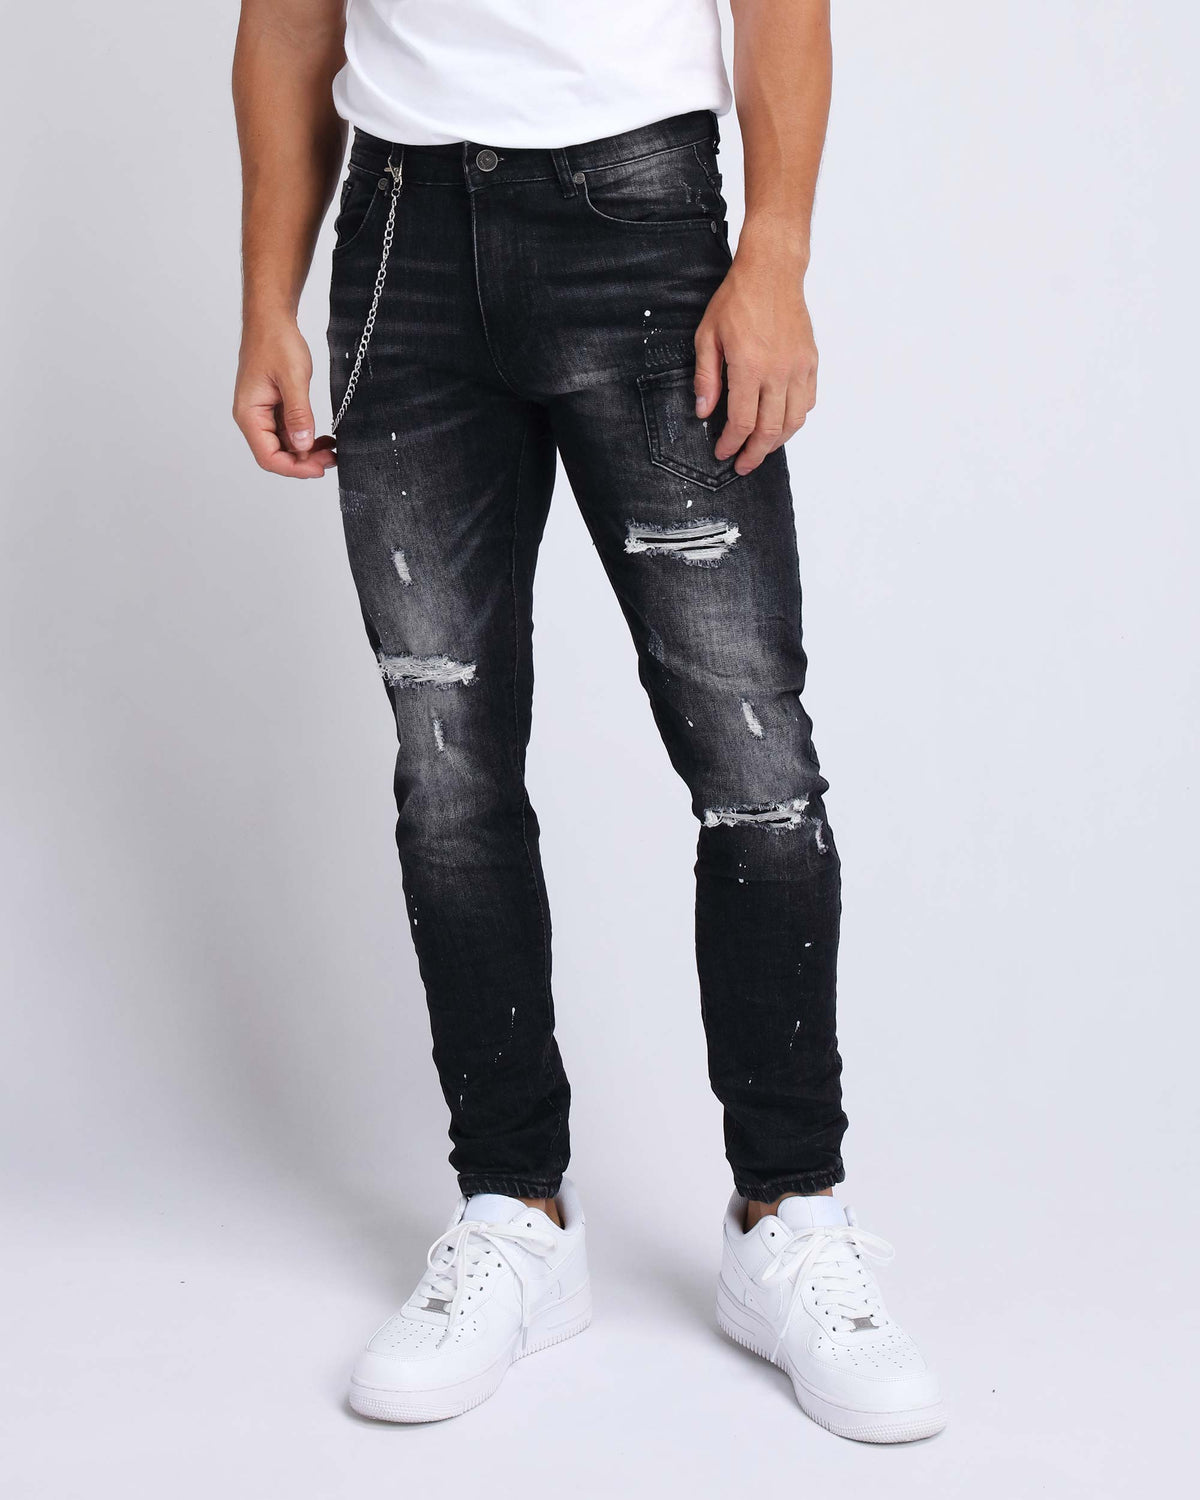 LOGEQI Spray Paint Slim Fit Ripped Black Jeans